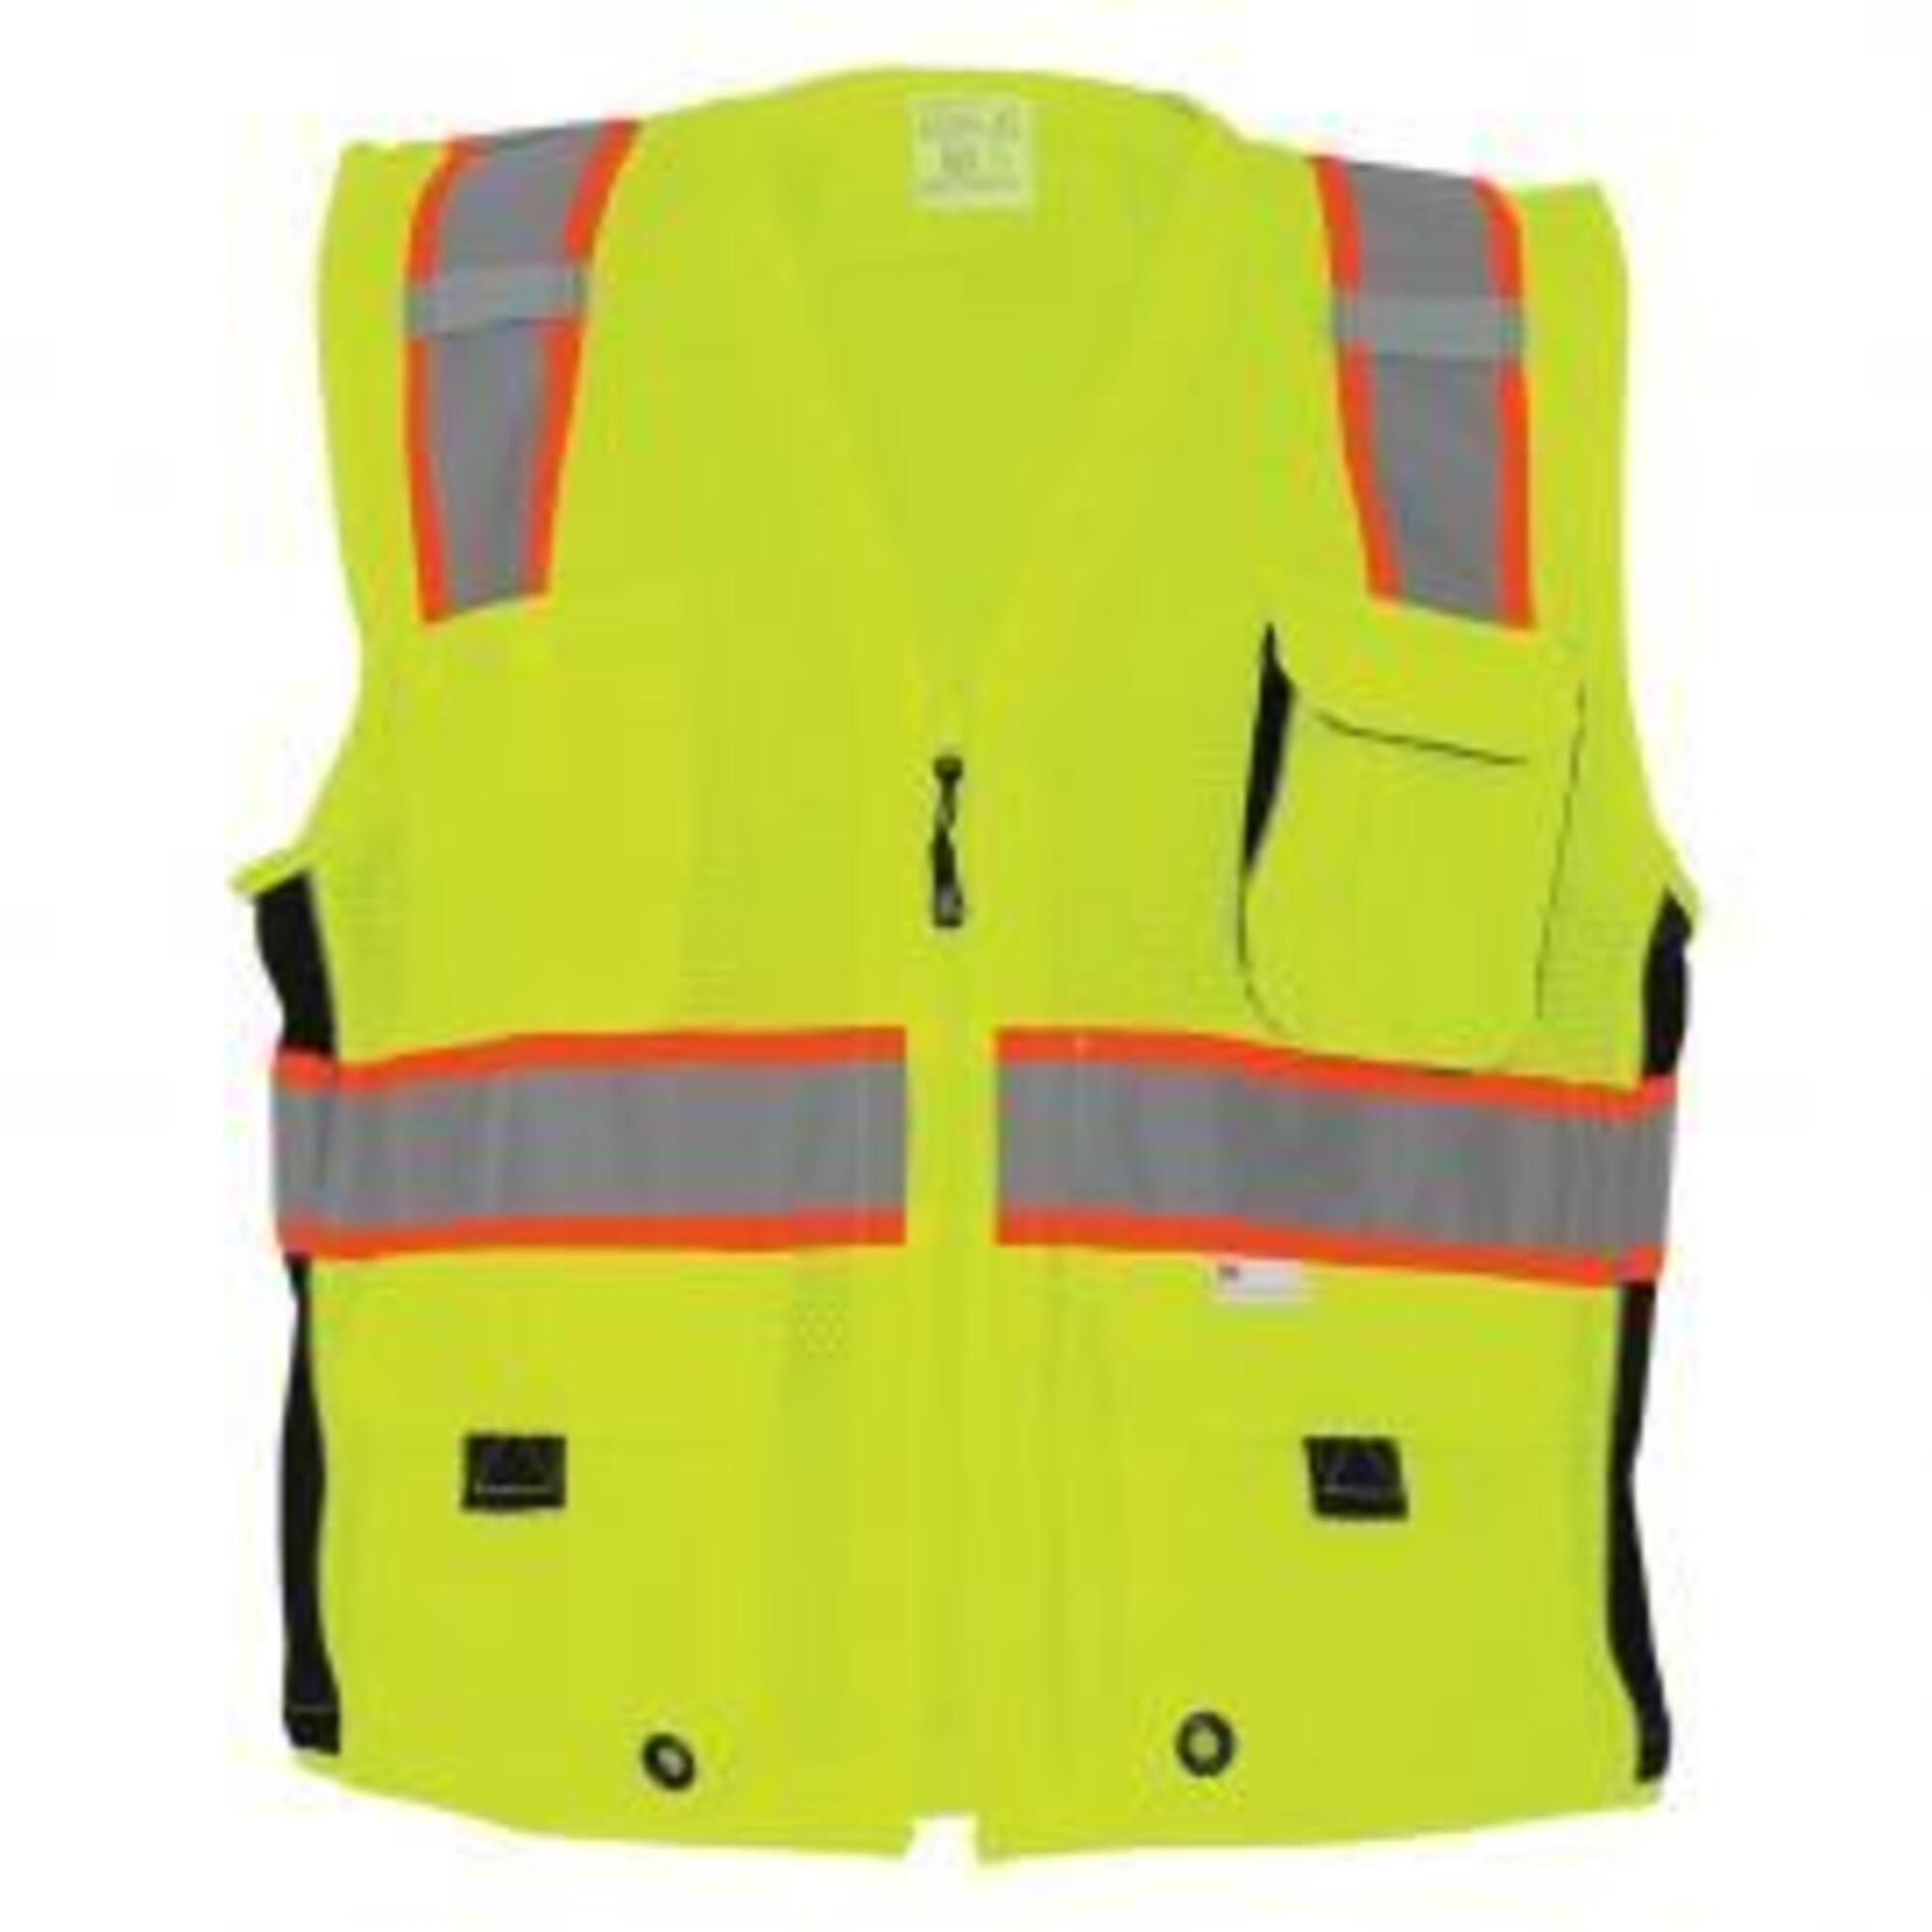 FrogWear Surveyors Safety Vest, 2XL, Yellow/Green, Model GLO-079-2XL